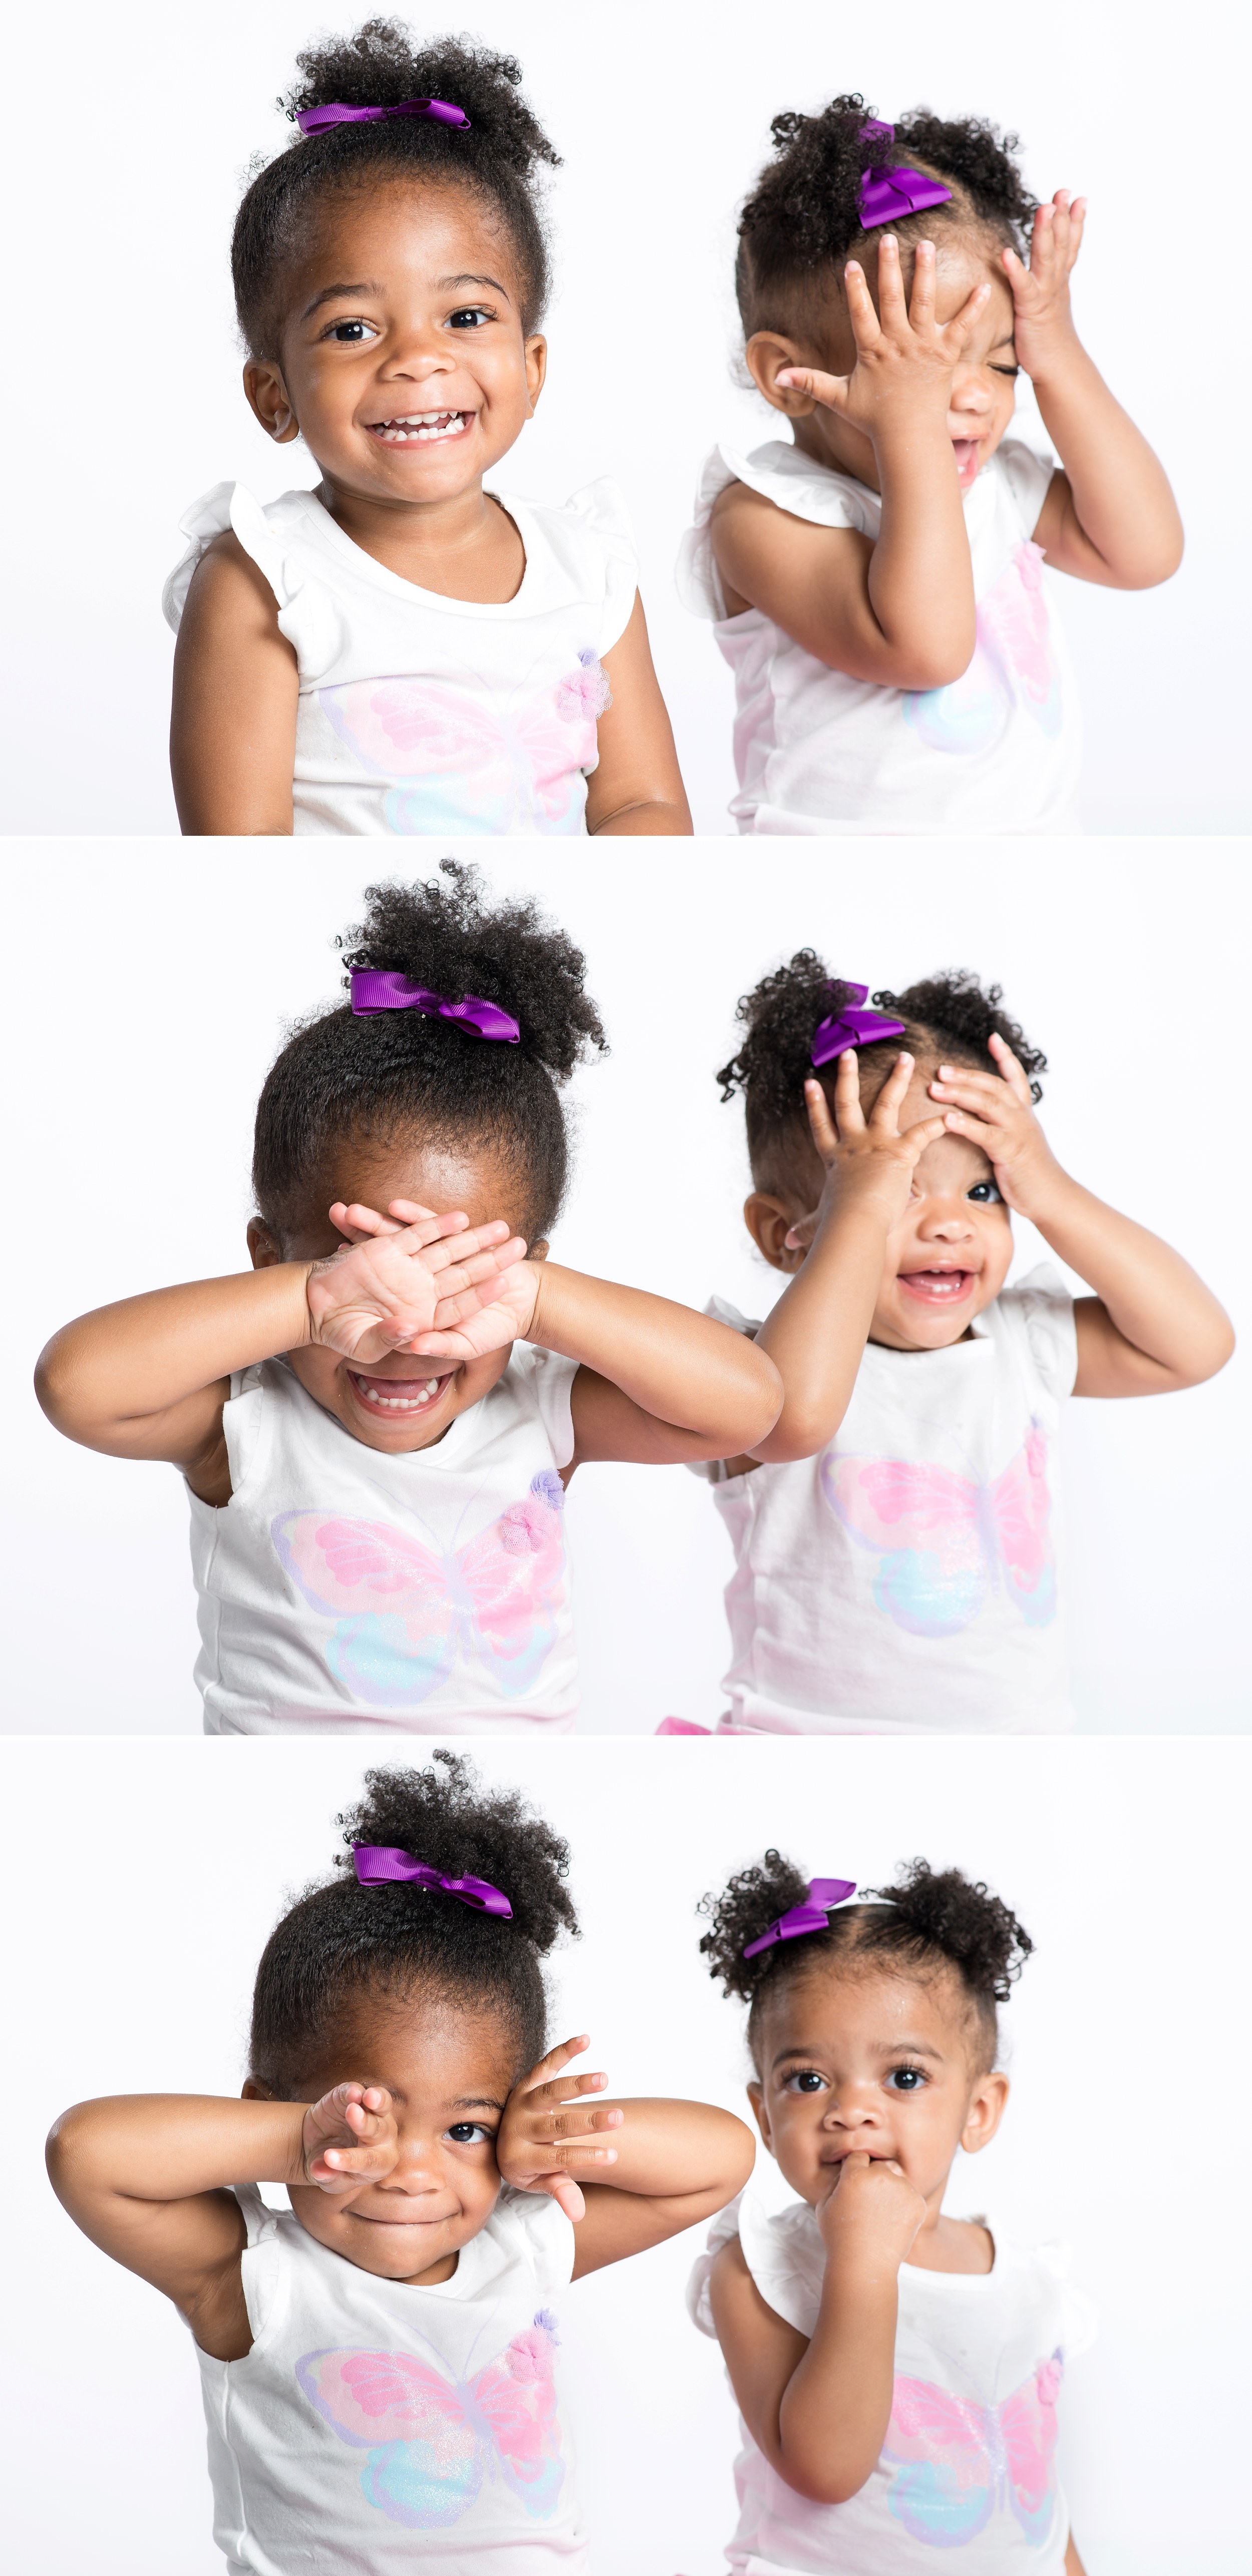 St-Augustine-Photographer-Kids-Studio-Portraits_0003.jpg